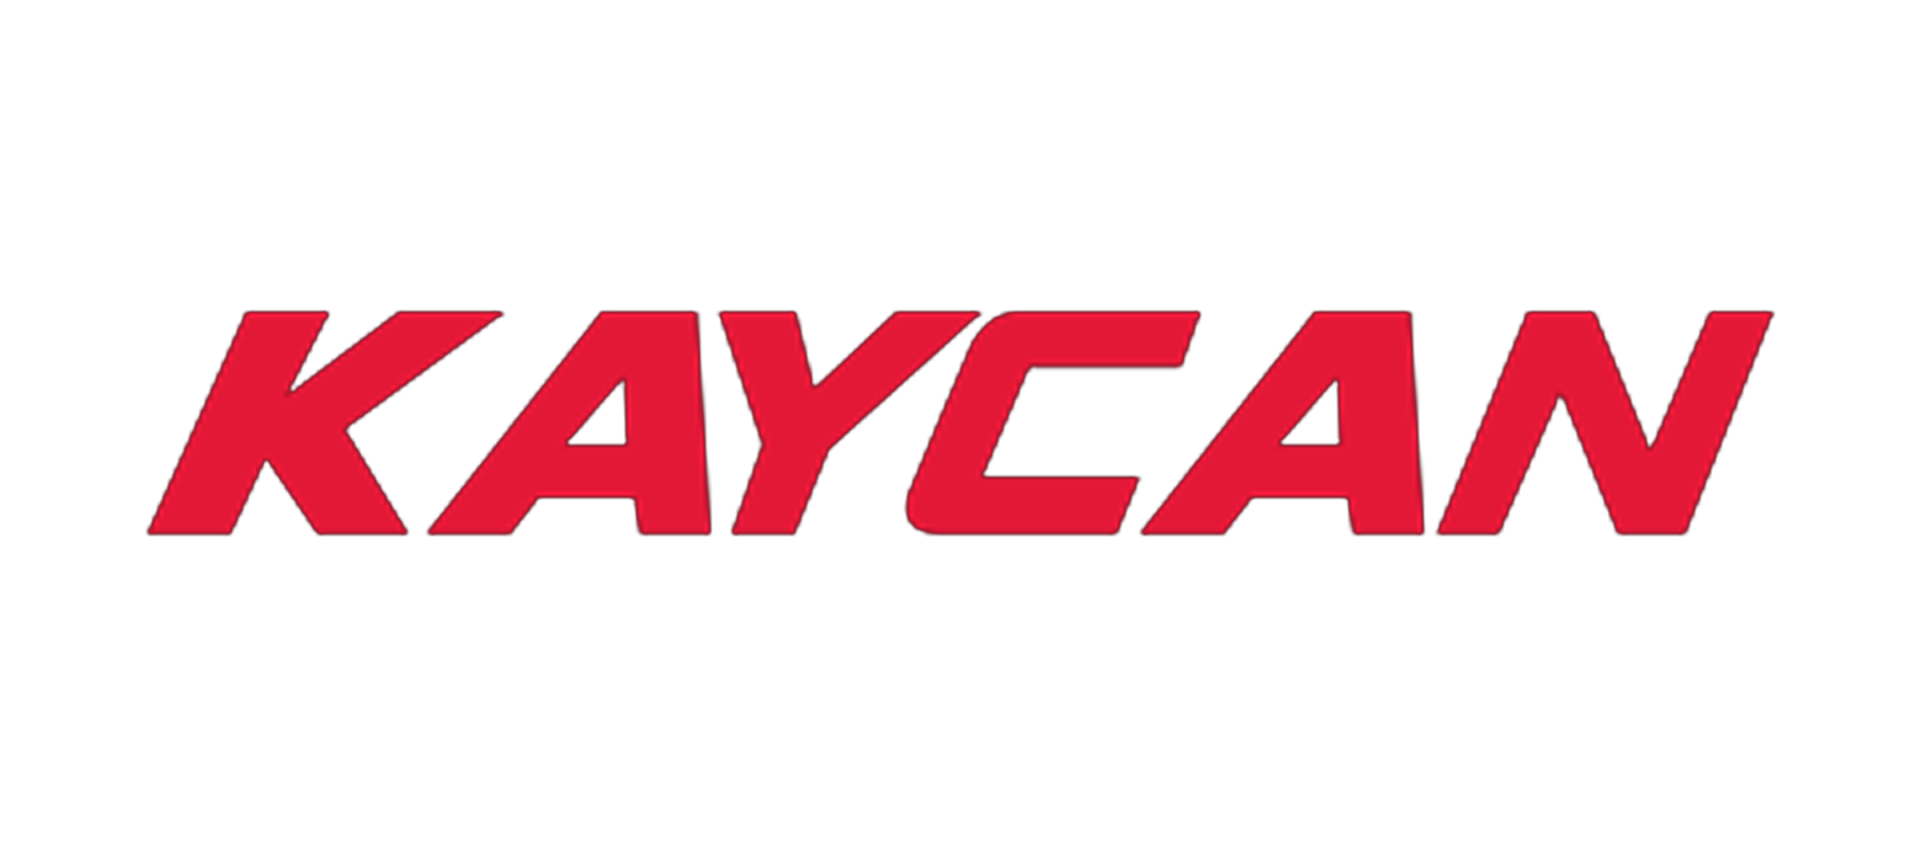 KAYCAN logo